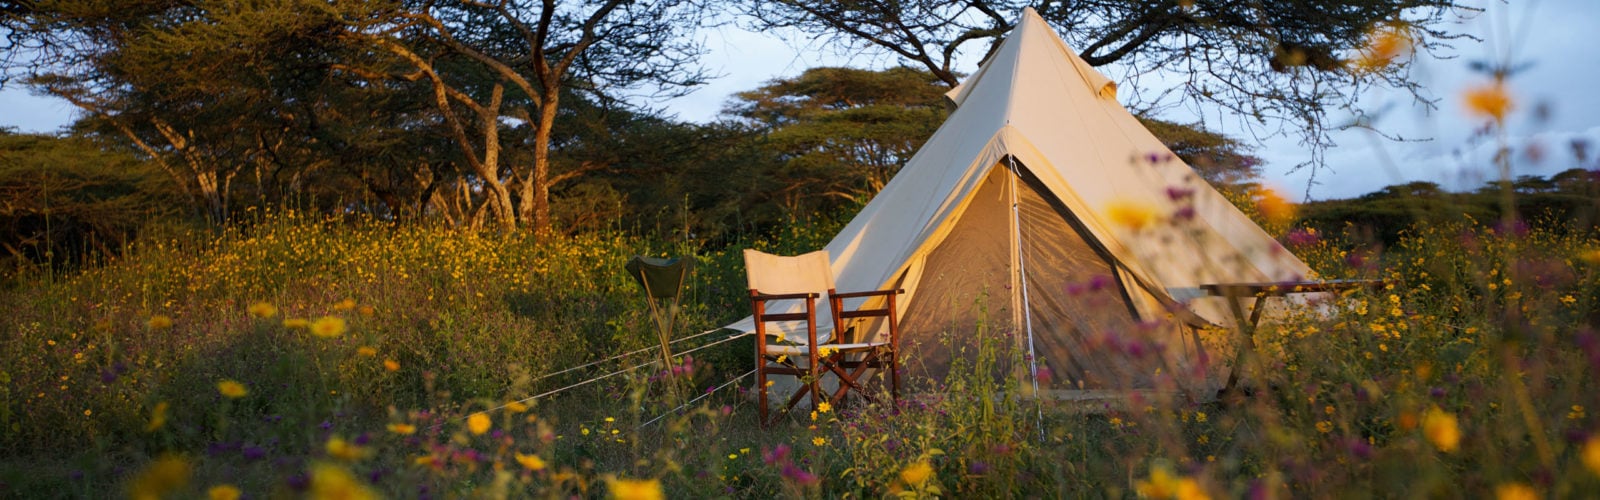 Serian Fly Camp, Kenya